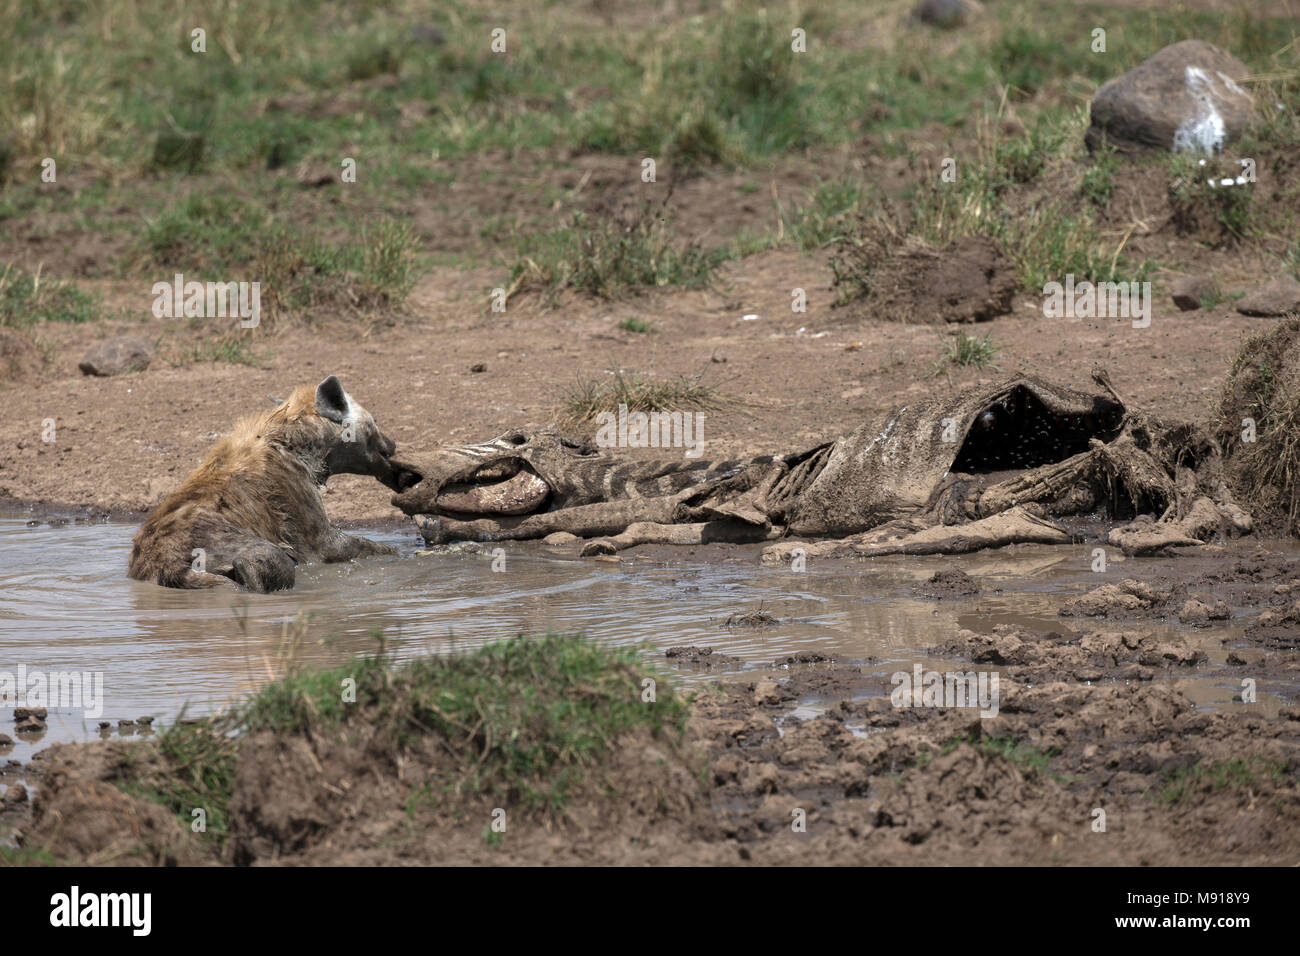 Spotted hyena feeding on a carcass of a zebra.   Masai Mara game reserve. Kenya. Stock Photo